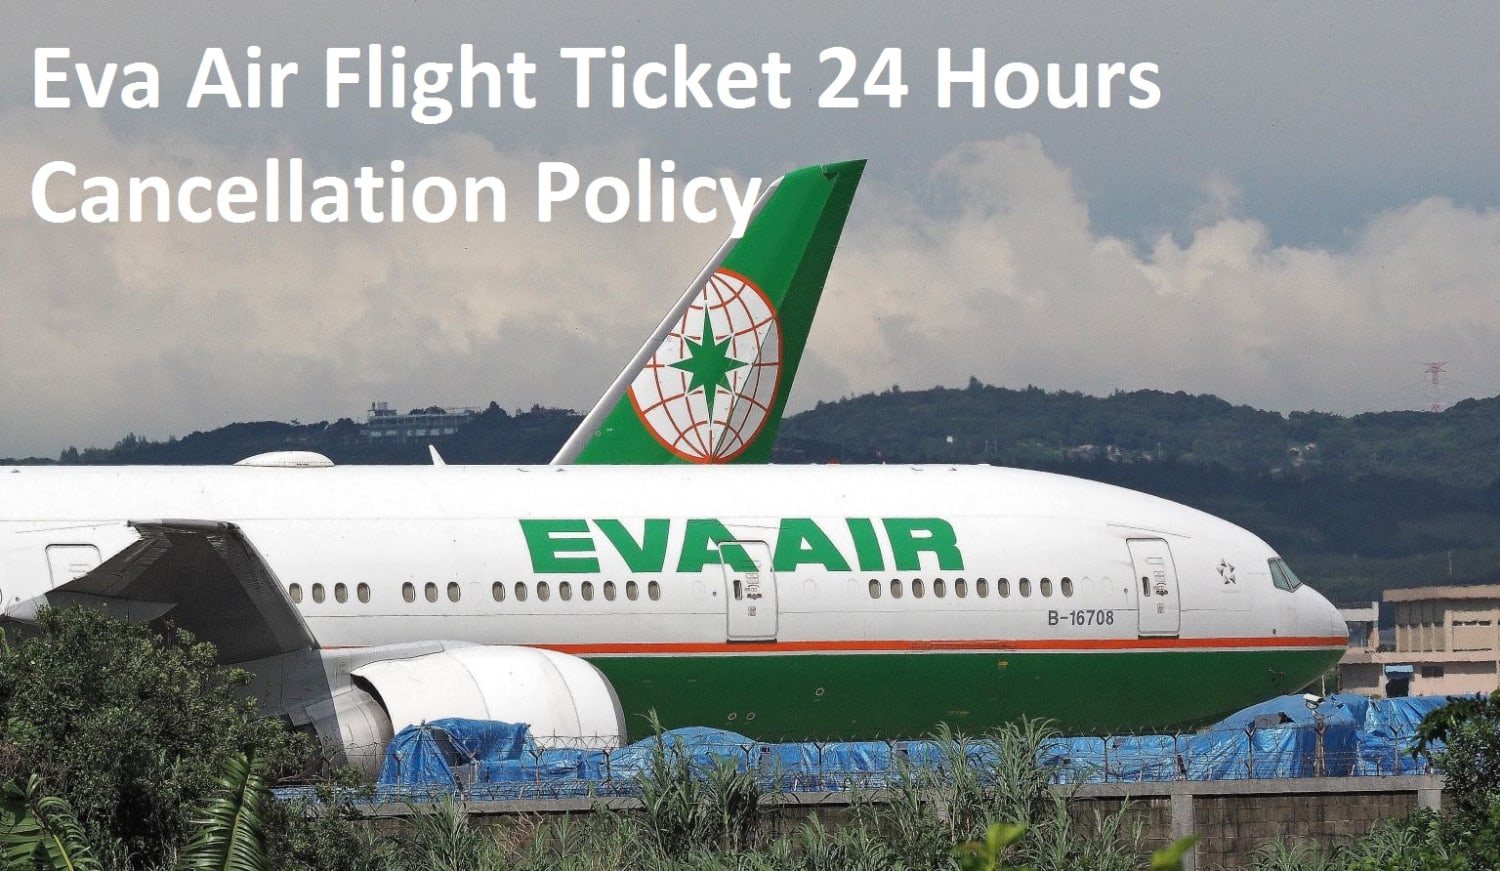 EVA Air Cancellation Policy, Ticket Cancellation Fee & Refund Policy